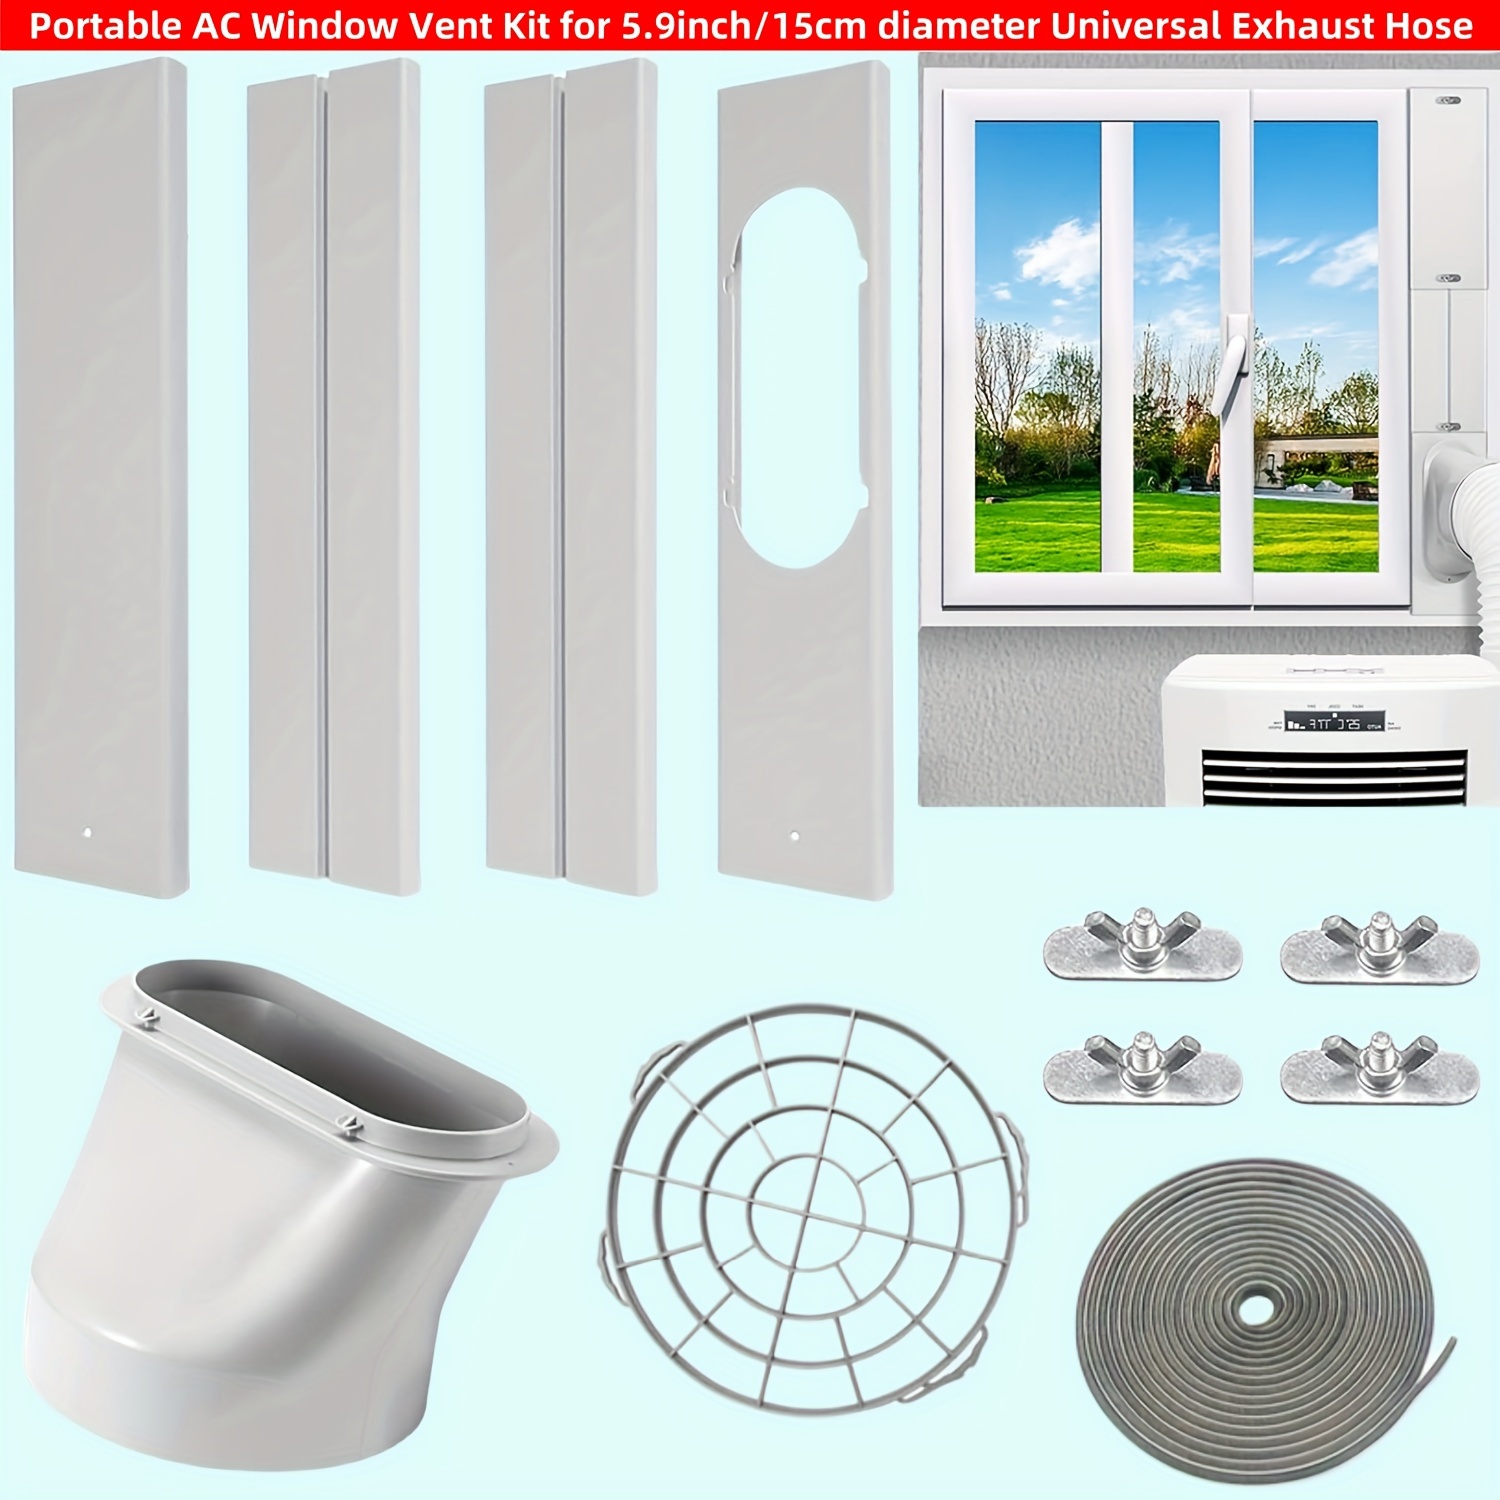 Kit de placas de sellado de ventana de aire acondicionado portátil para  manguera de escape de CA portátil con diámetro de 5.9 pulgadas, paneles de